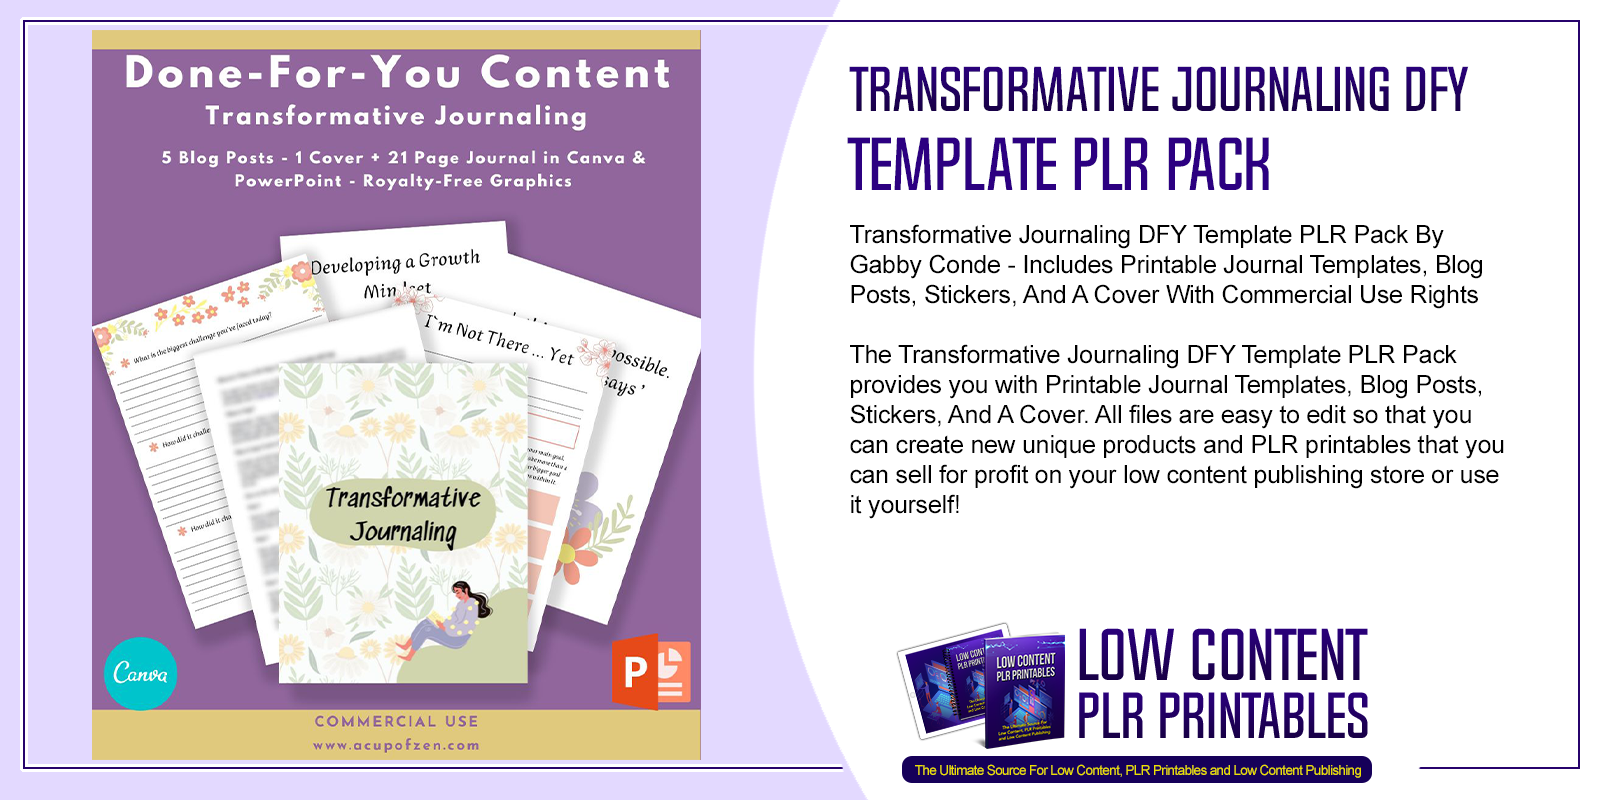 Transformative Journaling DFY Template PLR Pack